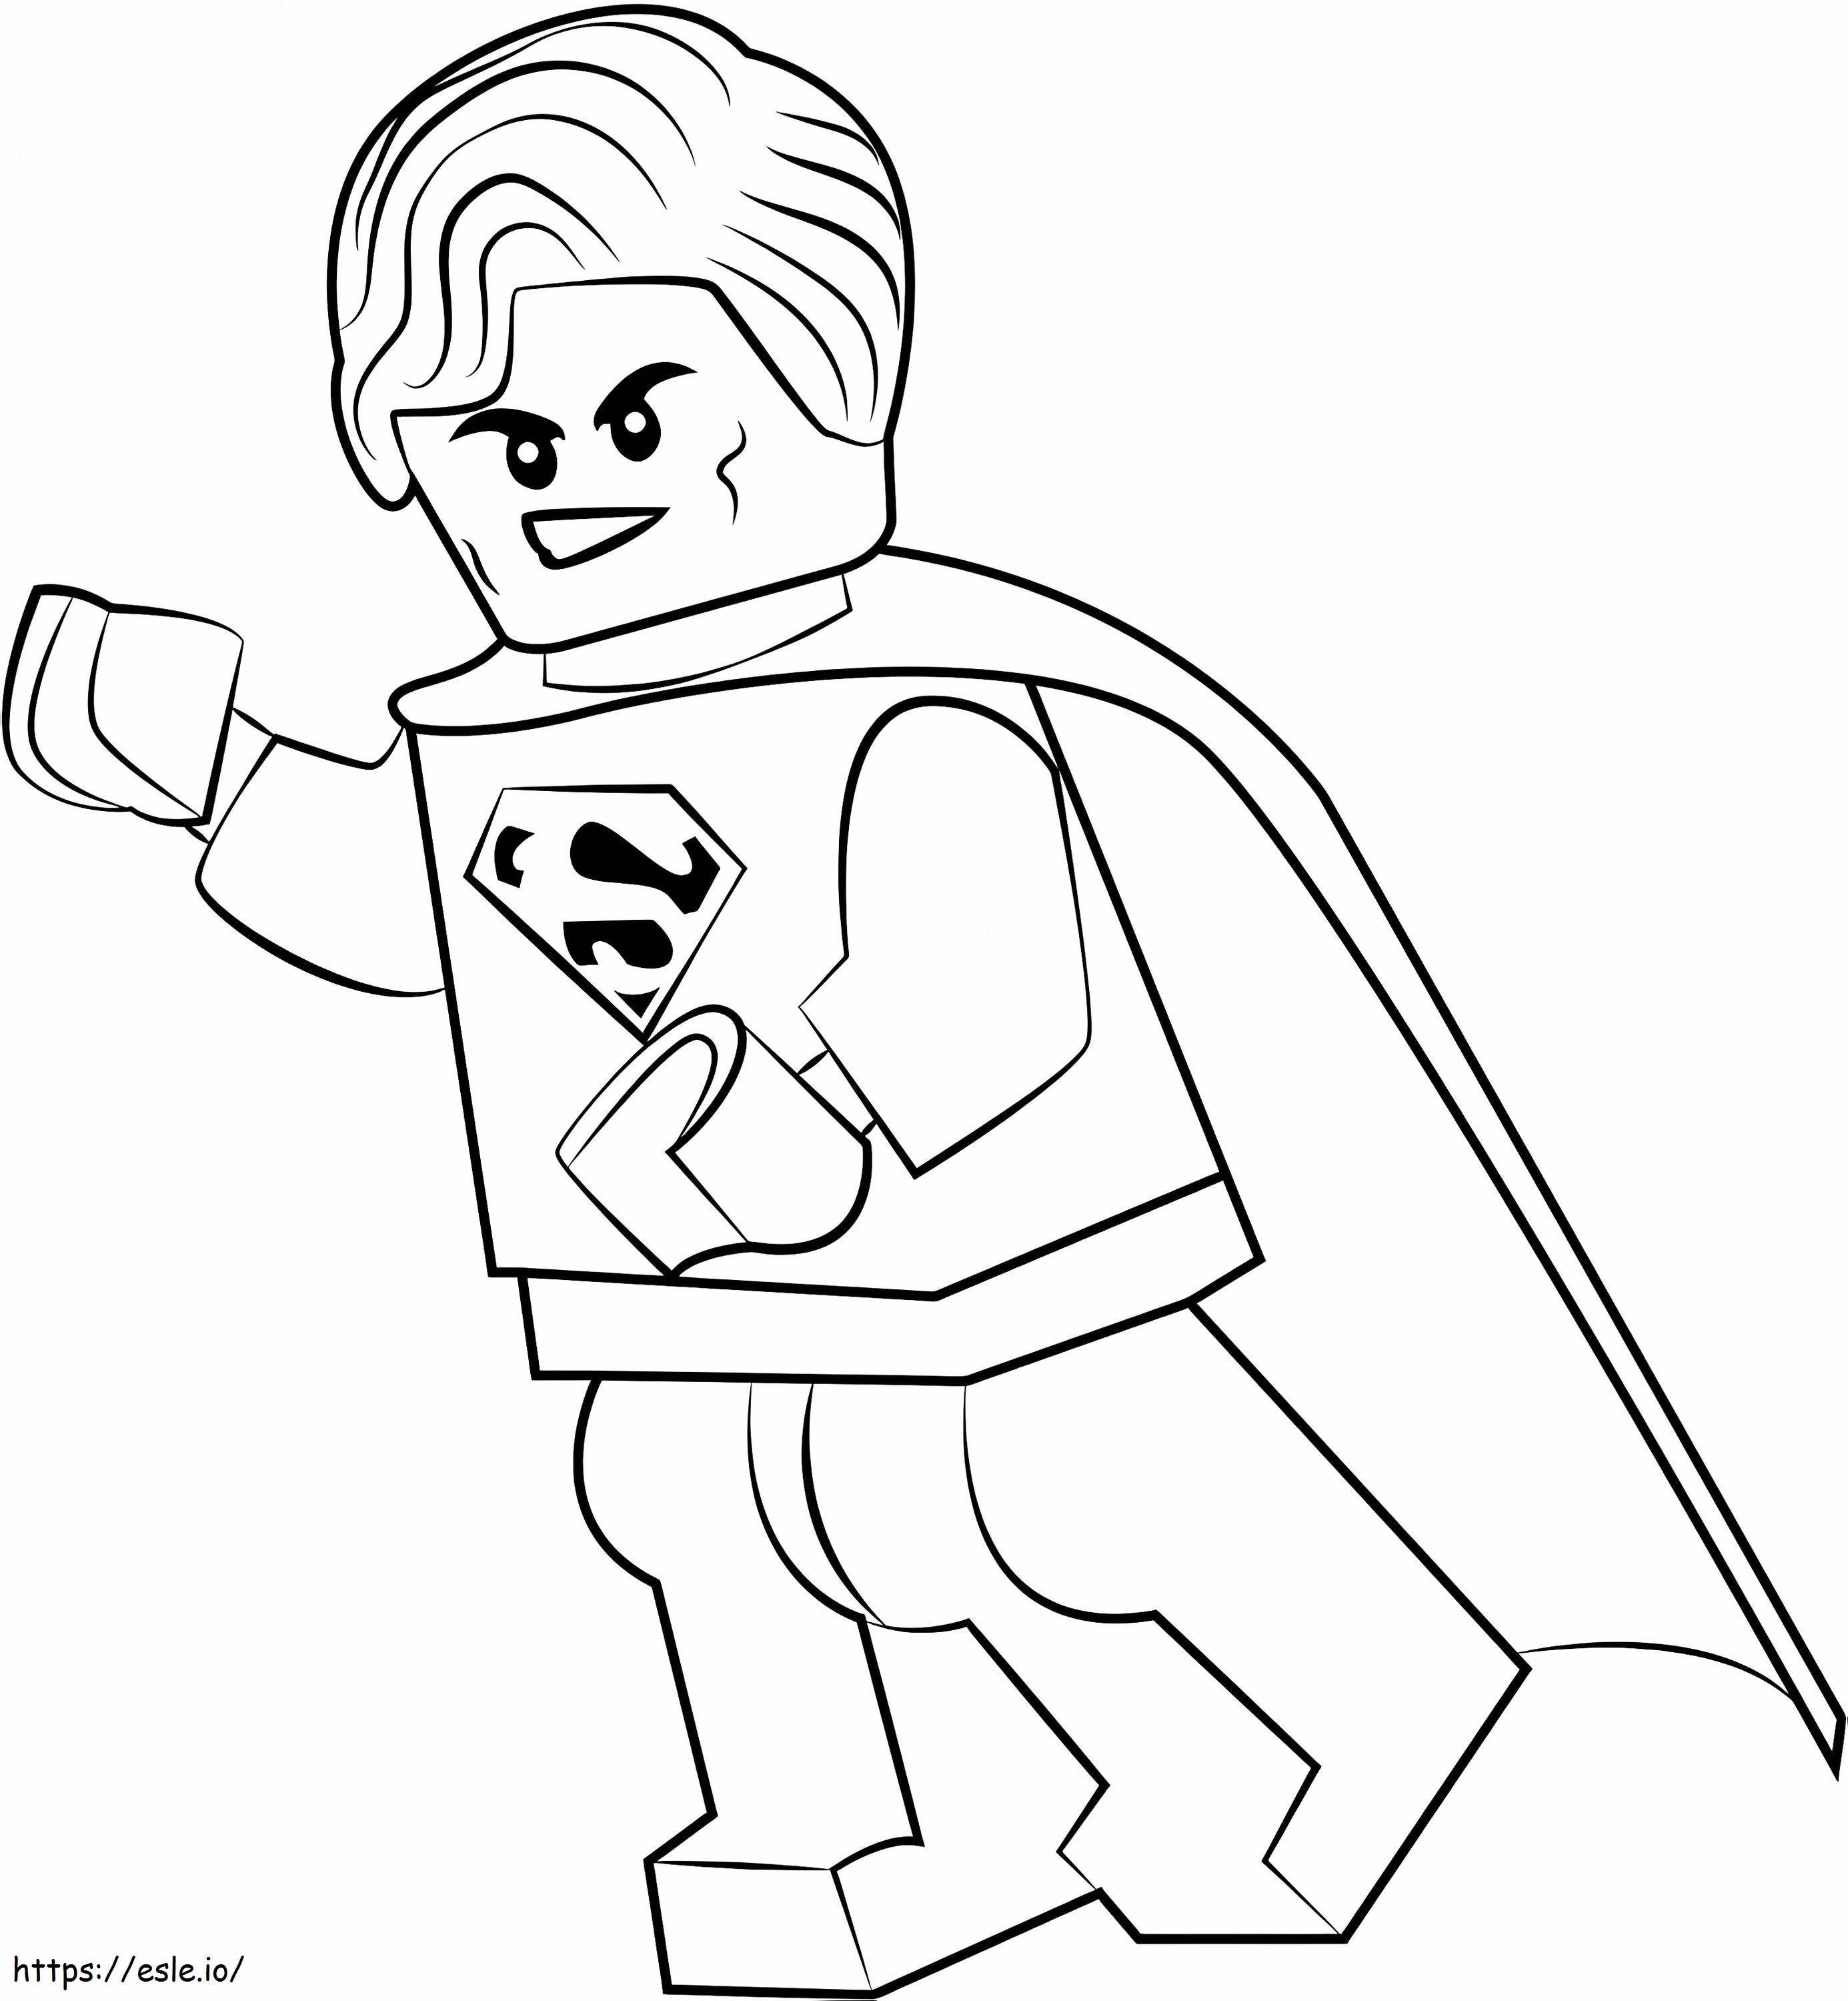 Coloriage 1530153640 LEGO Superman1 à imprimer dessin